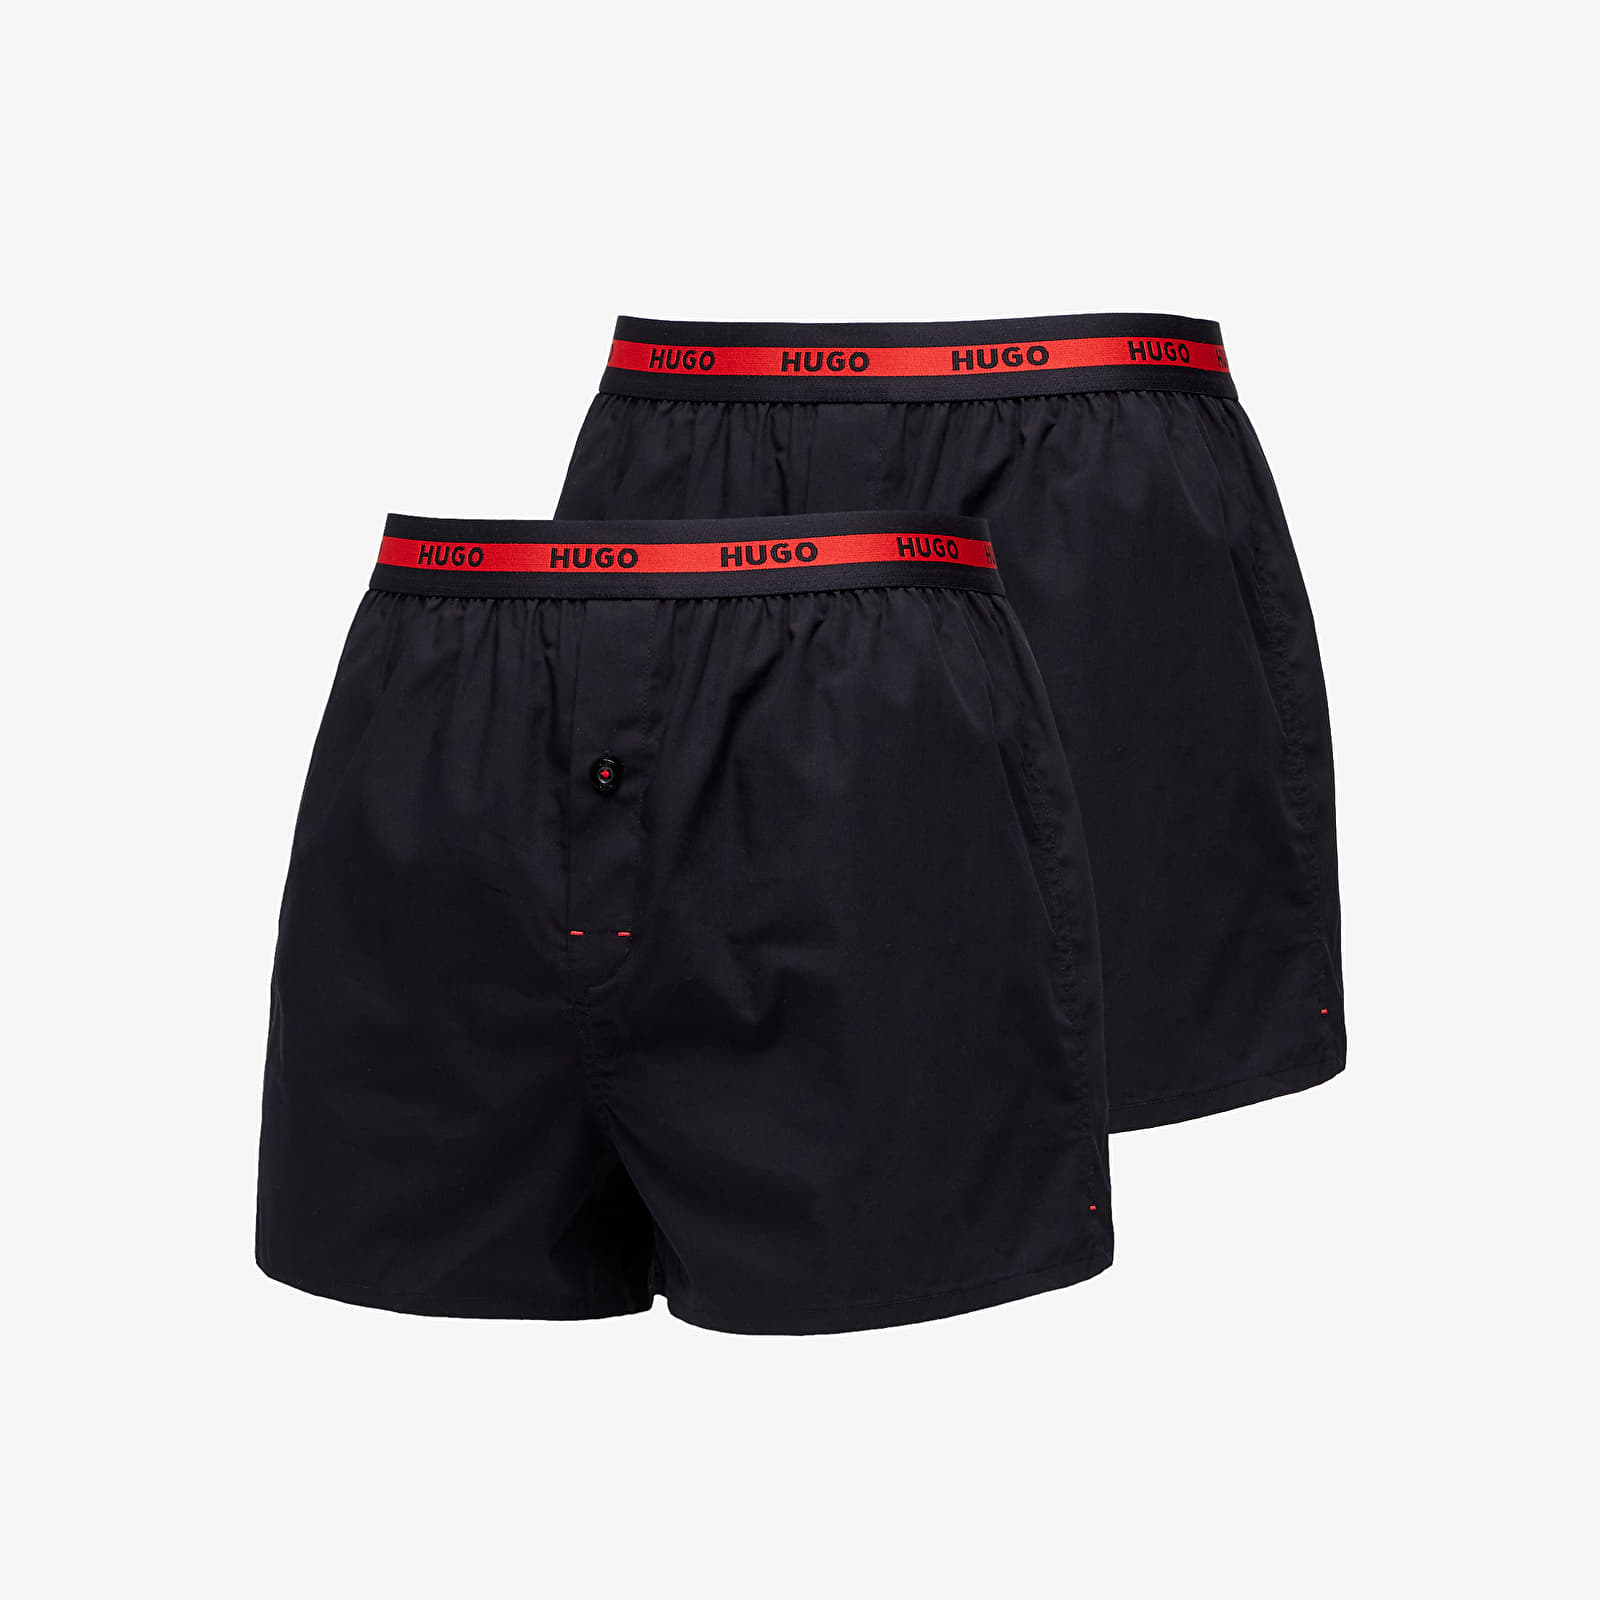 Boxer shorts Hugo Boss Woven Boxer Shorts 2 Pack Black